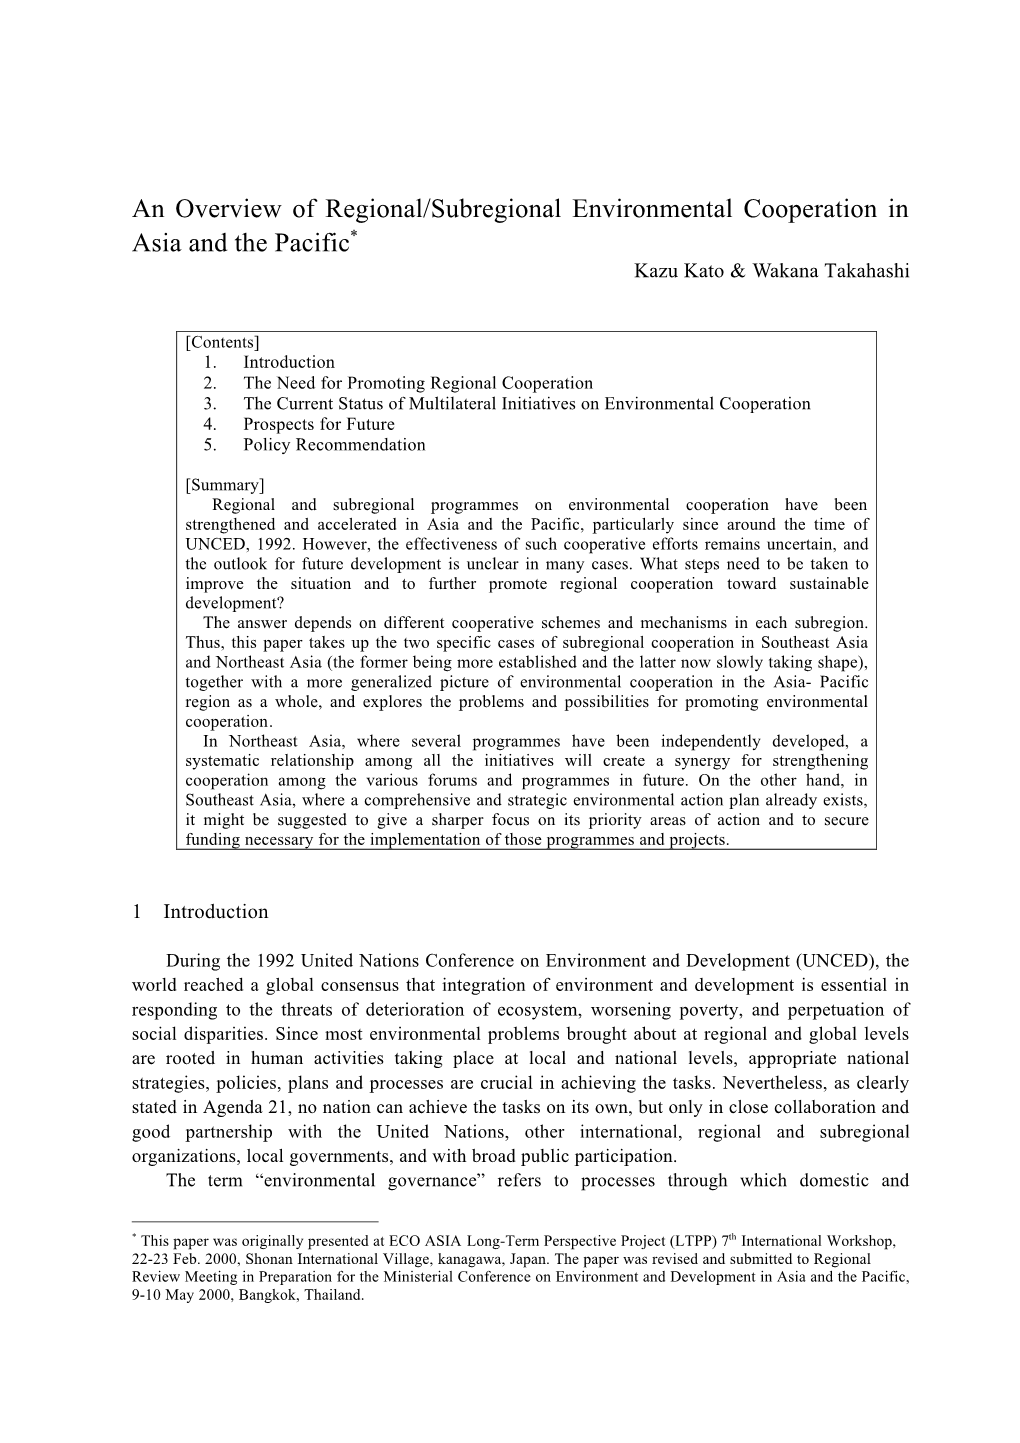 An Overview of Regional/Subregional Environmental Cooperation in Asia and the Pacific* Kazu Kato & Wakana Takahashi